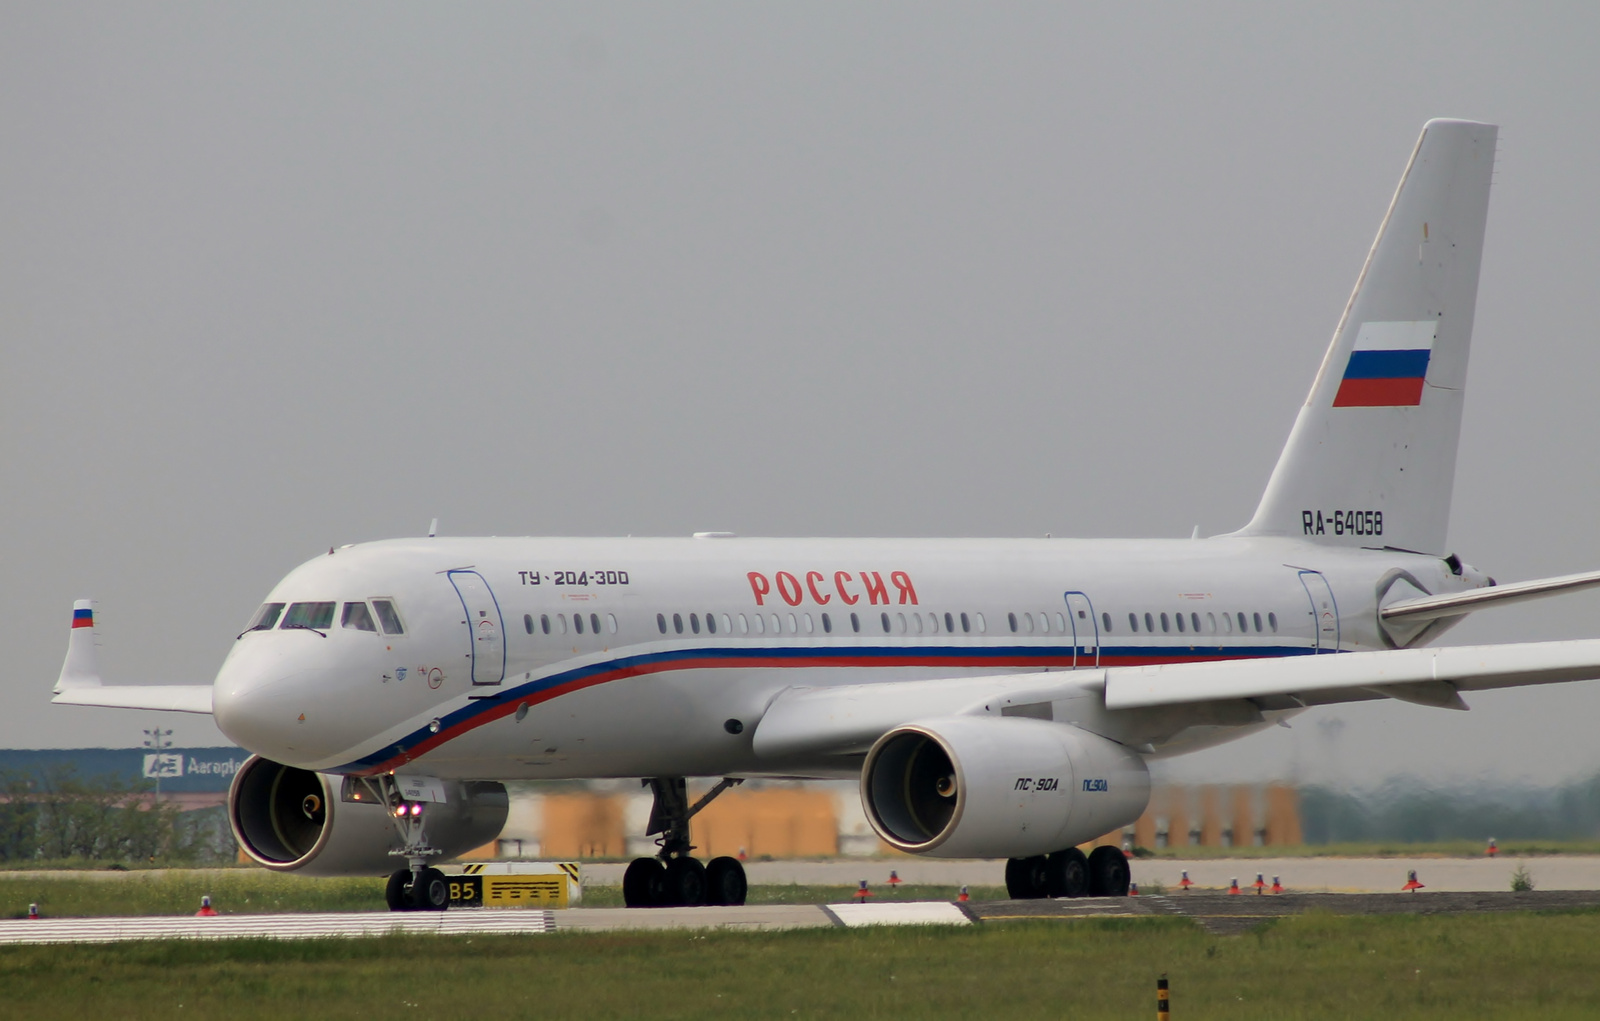 Rossiya - Russian Airlines